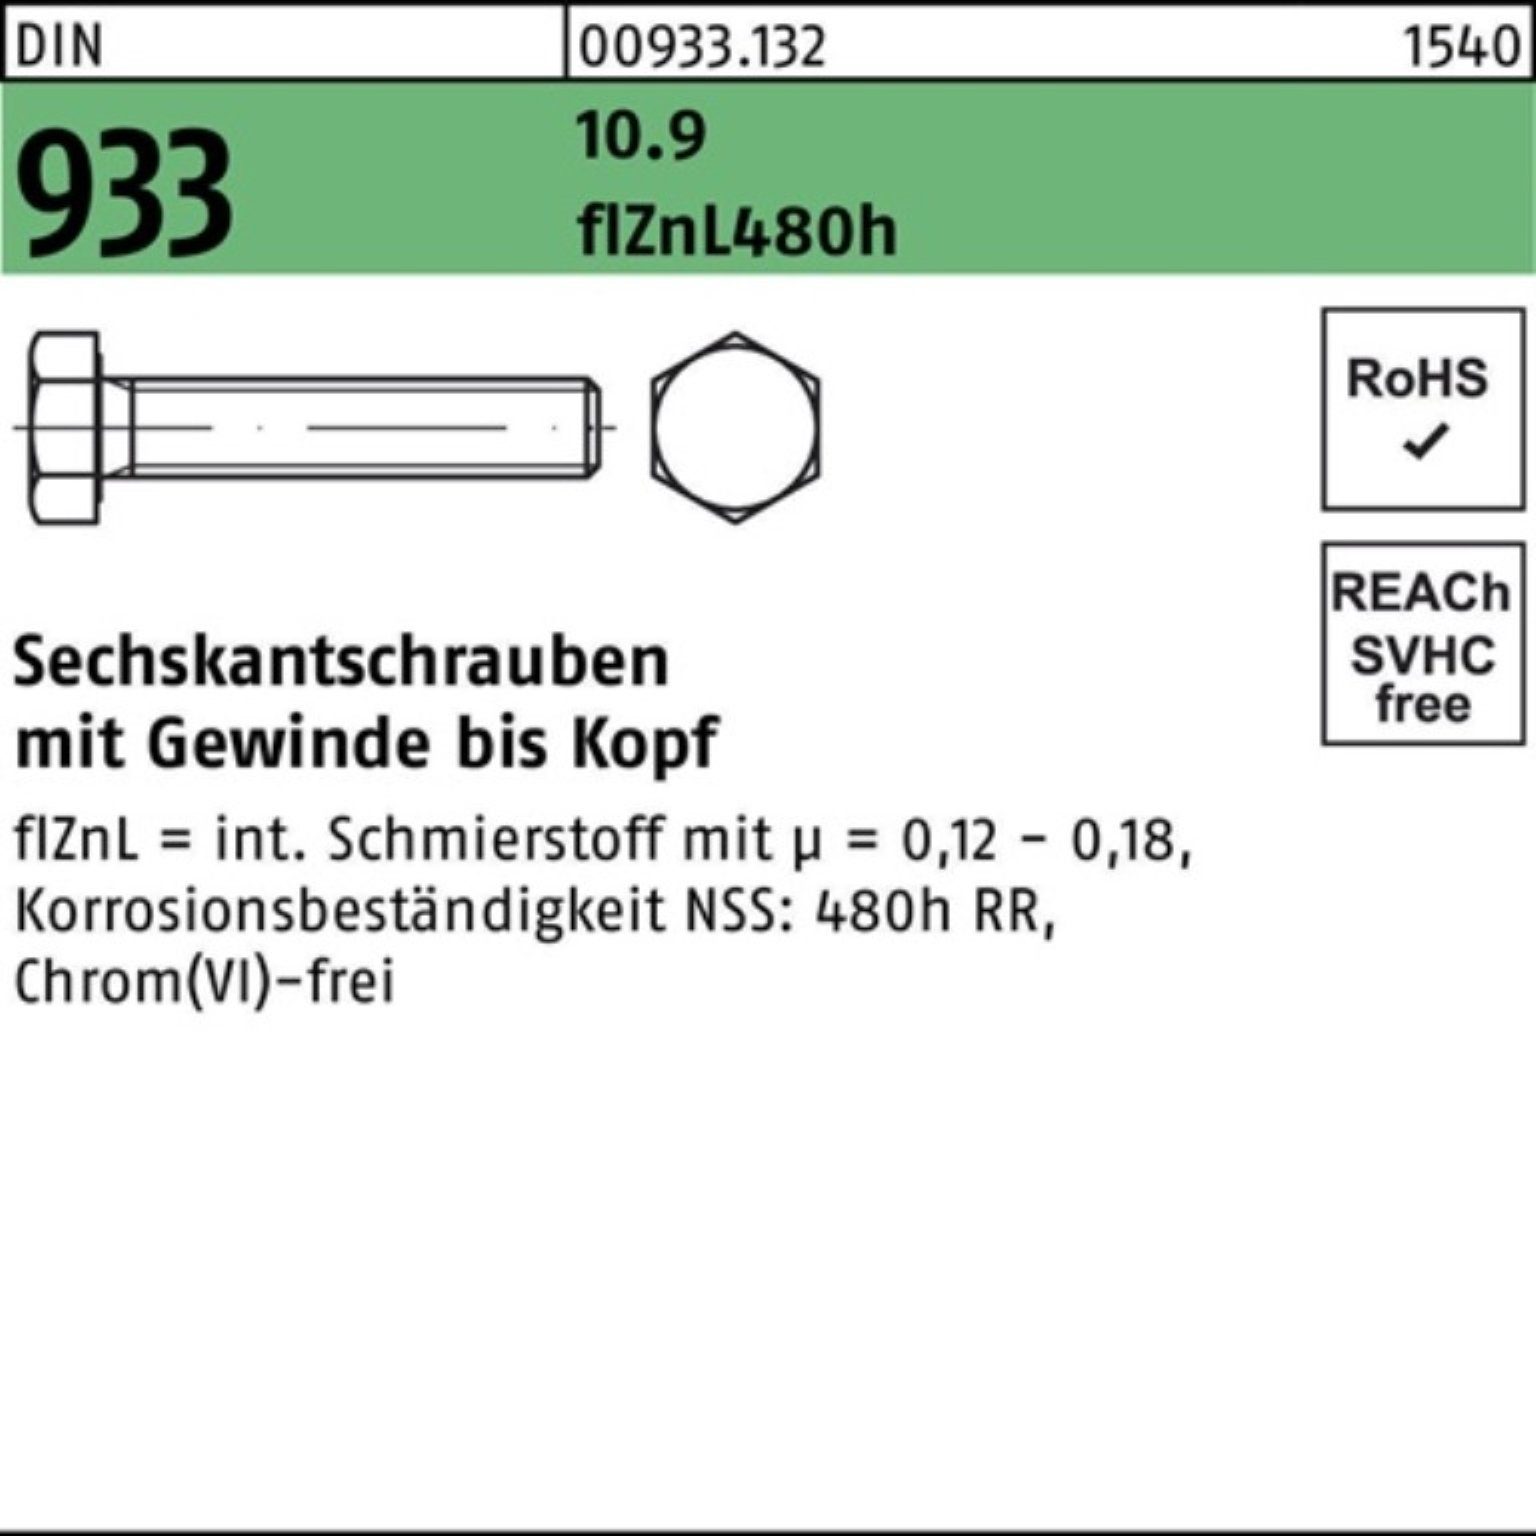 Reyher Sechskantschraube 200er Pack Sechskantschraube DIN 933 VG M6x 40 10.9 flZnL/nc/x/x/480h